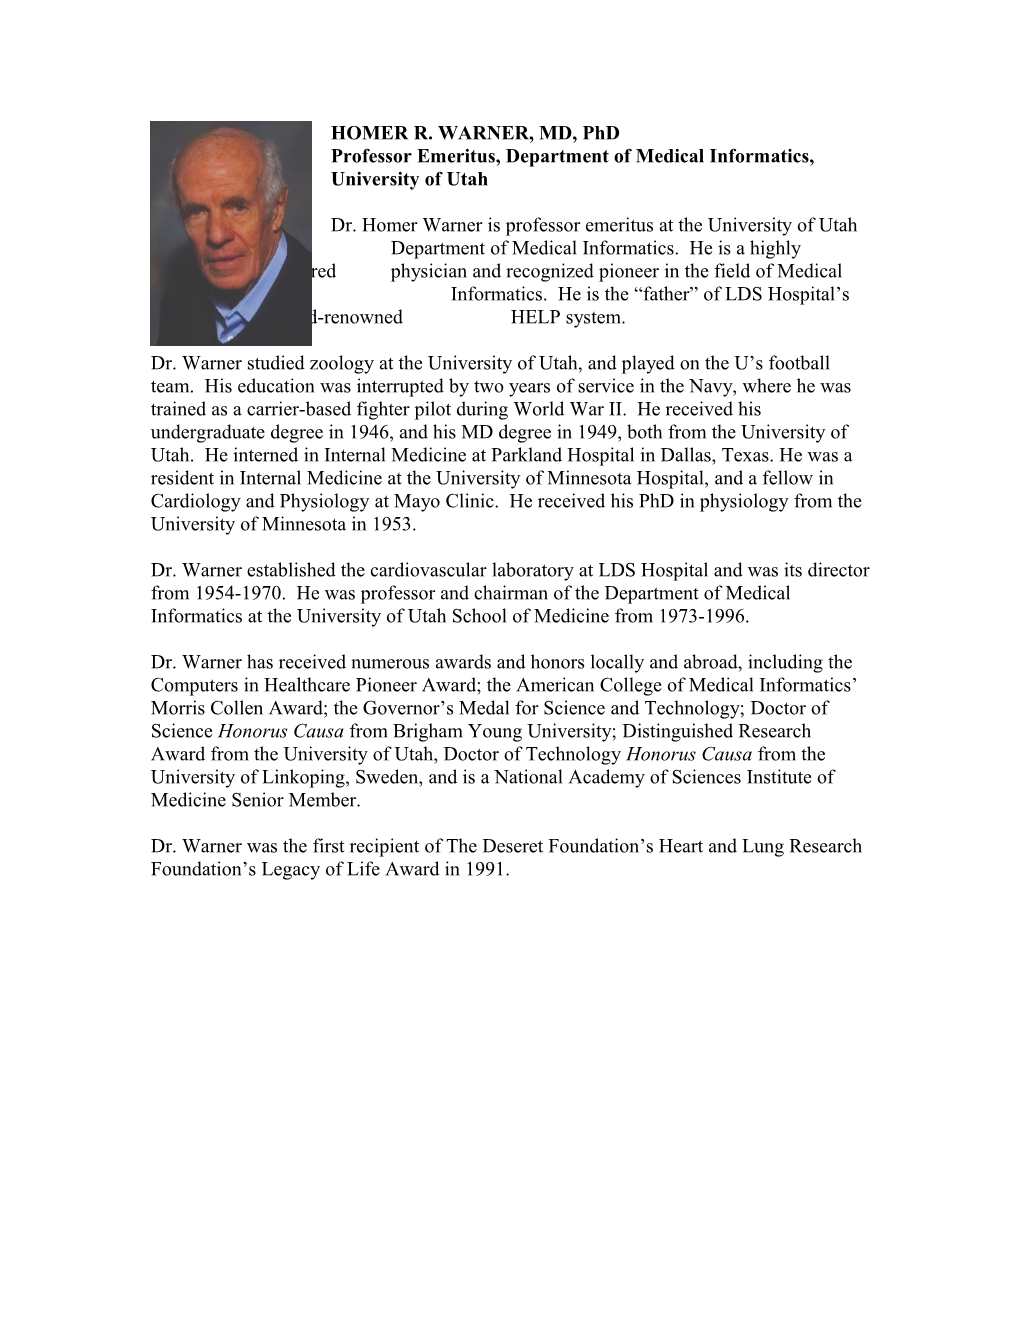 Professor Emeritus, Department of Medical Informatics, University of Utah